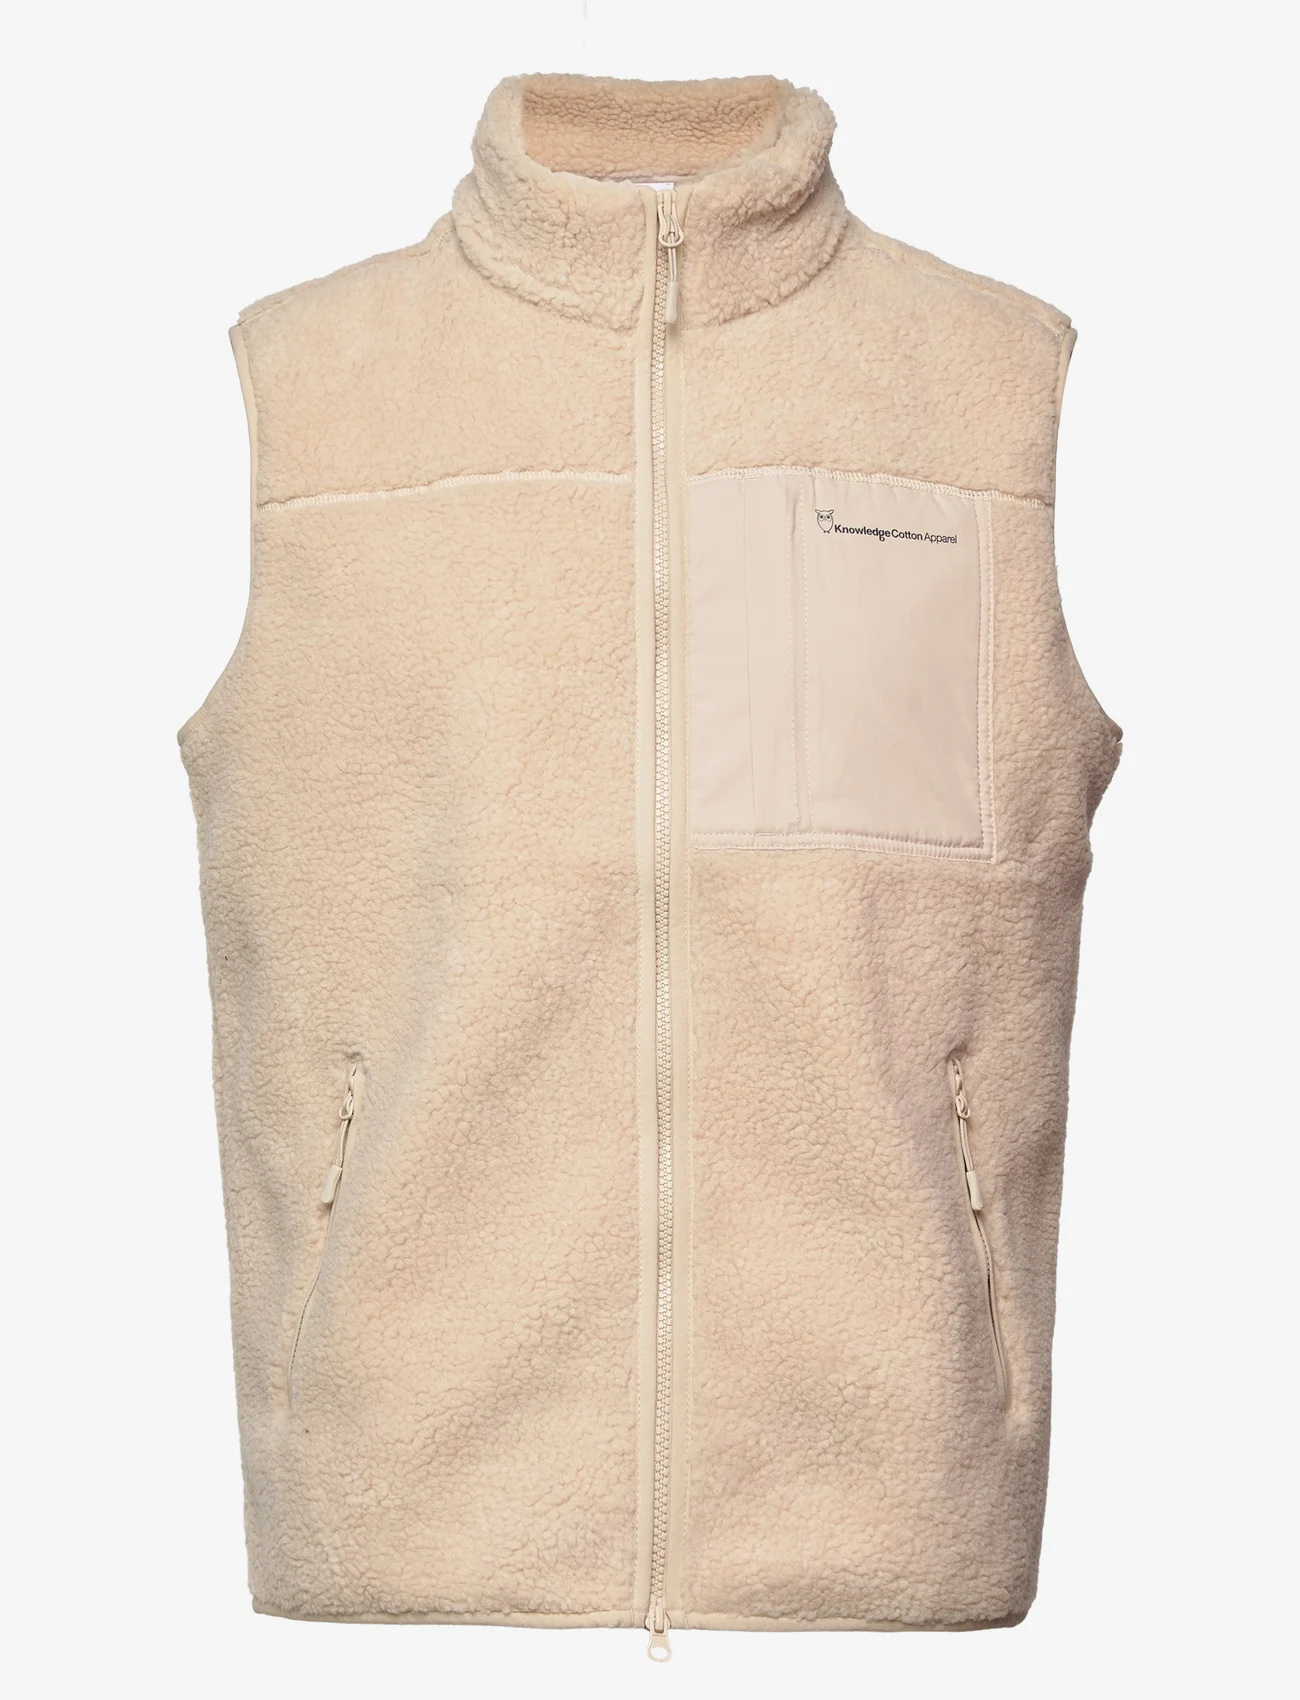 Knowledge Cotton Apparel - Teddy fleece vest - GRS/Vegan - bodywarmers - item colour - 0